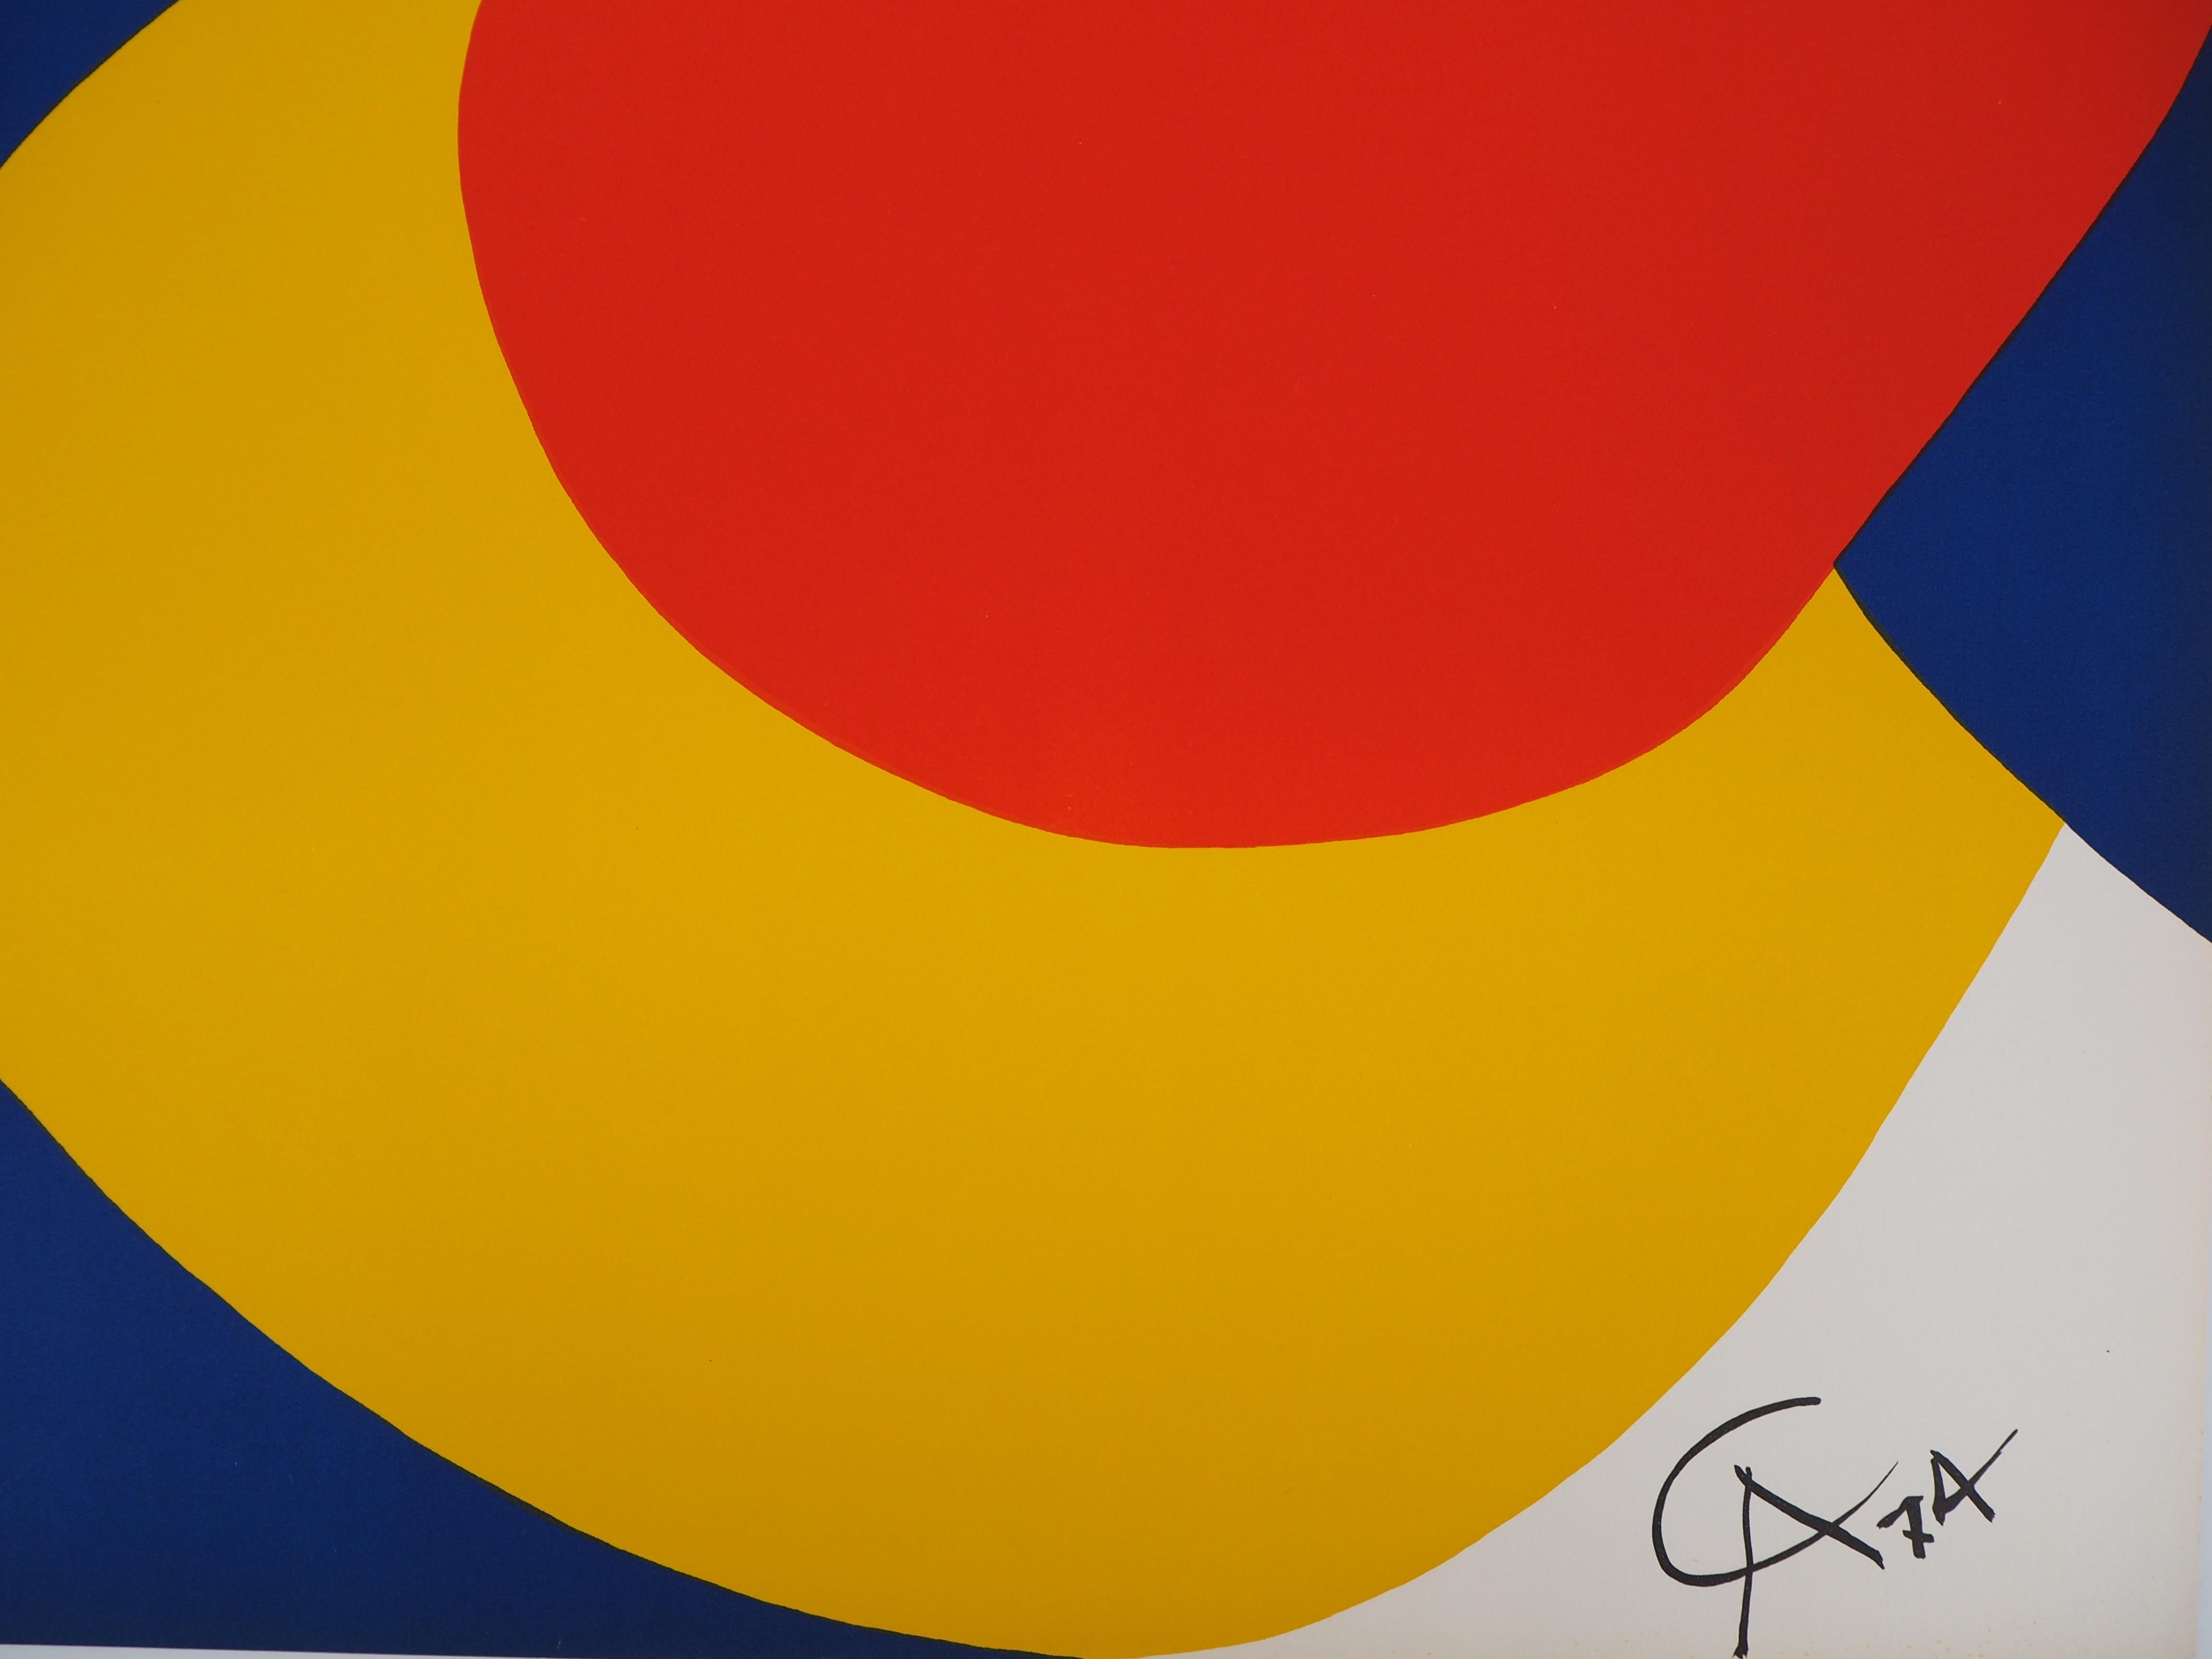 Yellow Crescent - Original lithograph, 1974 - Abstract Print by Alexander Calder